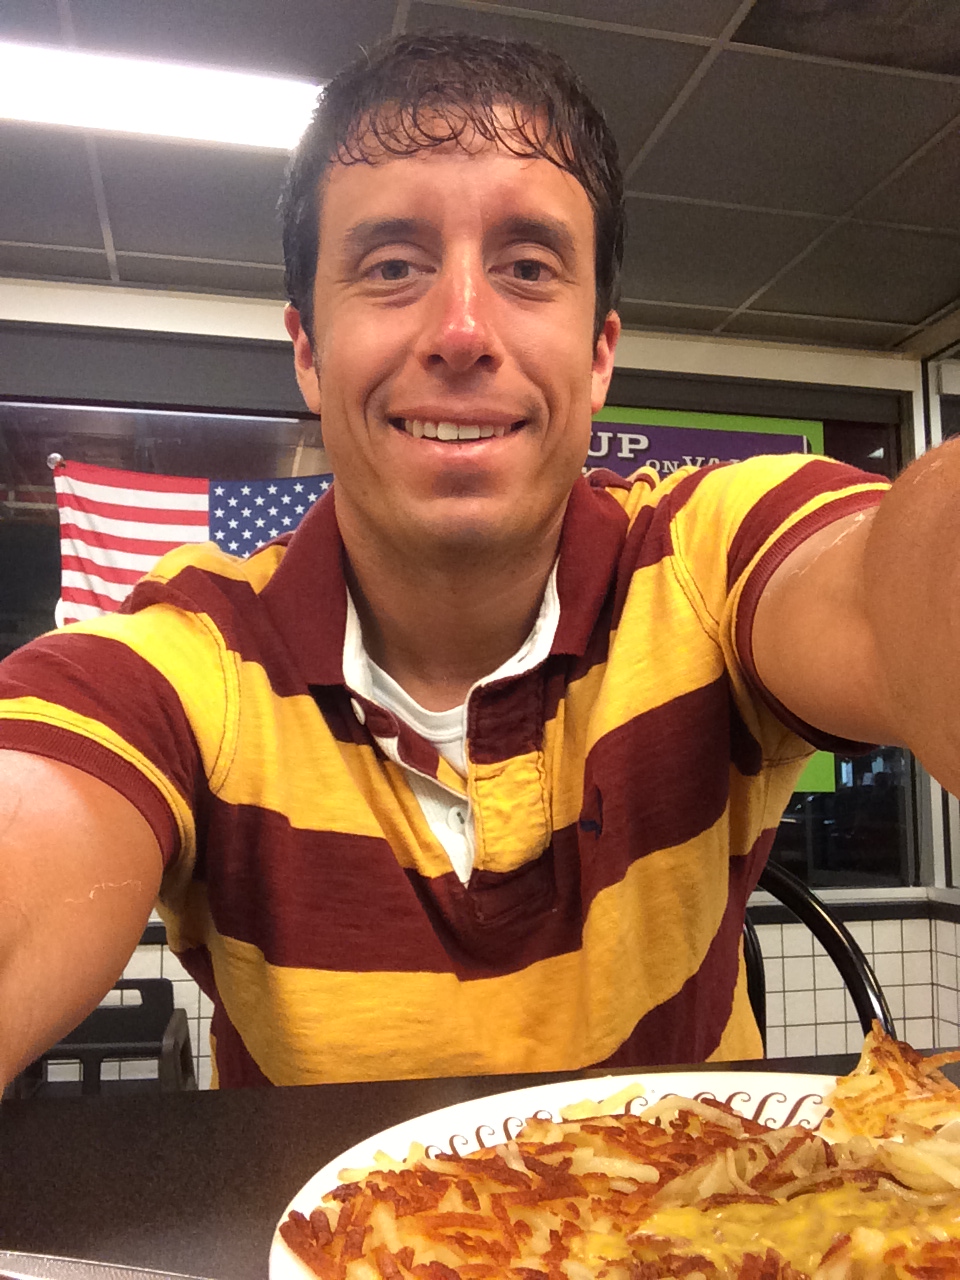 Me enjoying my experience at Waffle House.